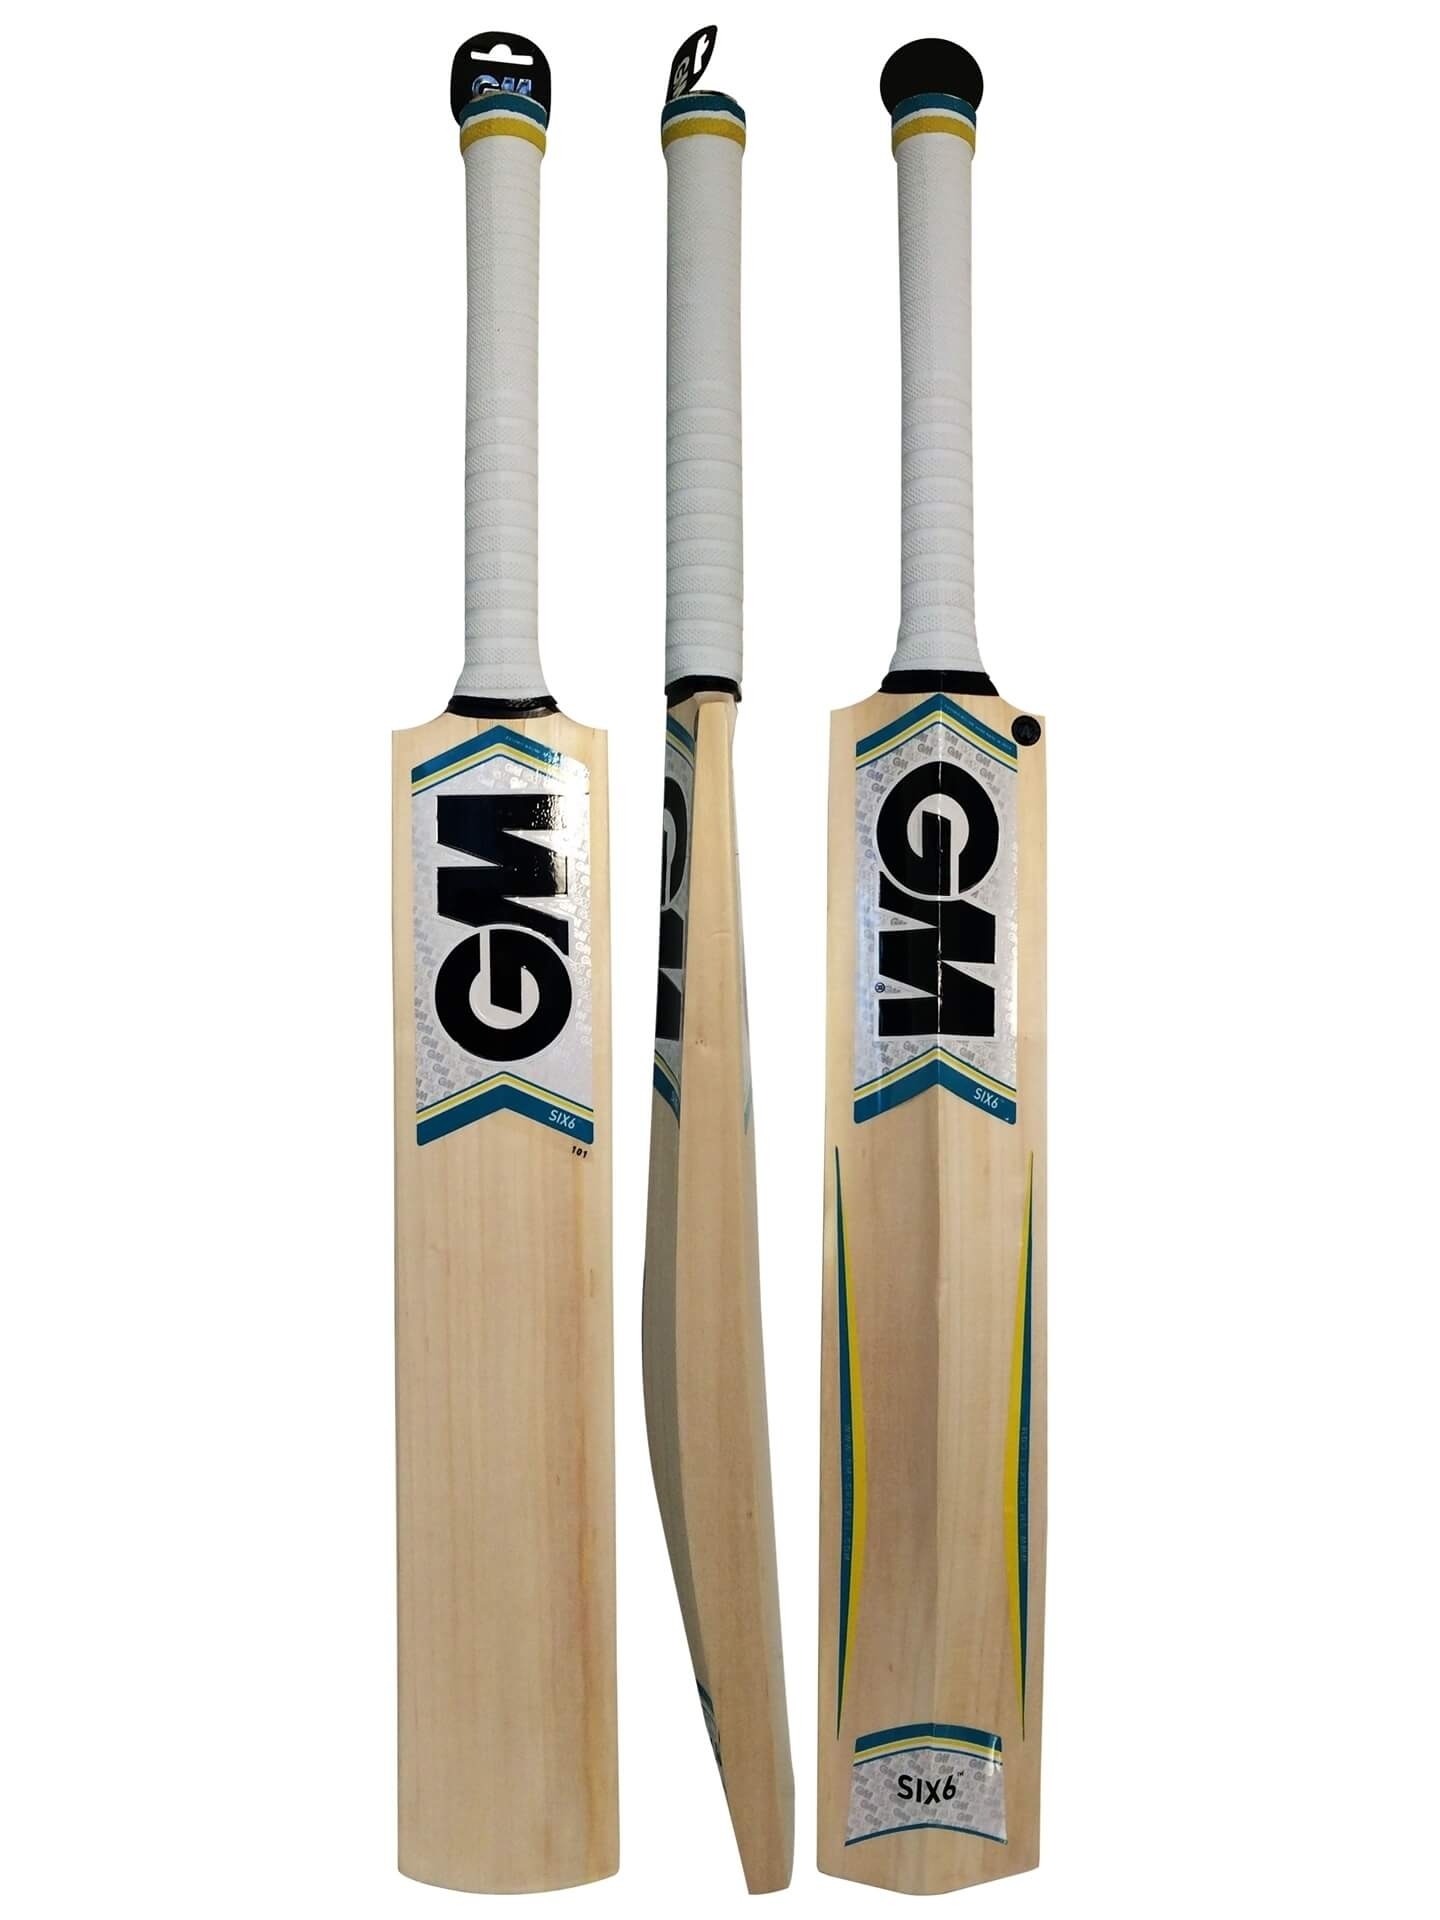 Cricket Bat - Gunn & Moore Cricket bat